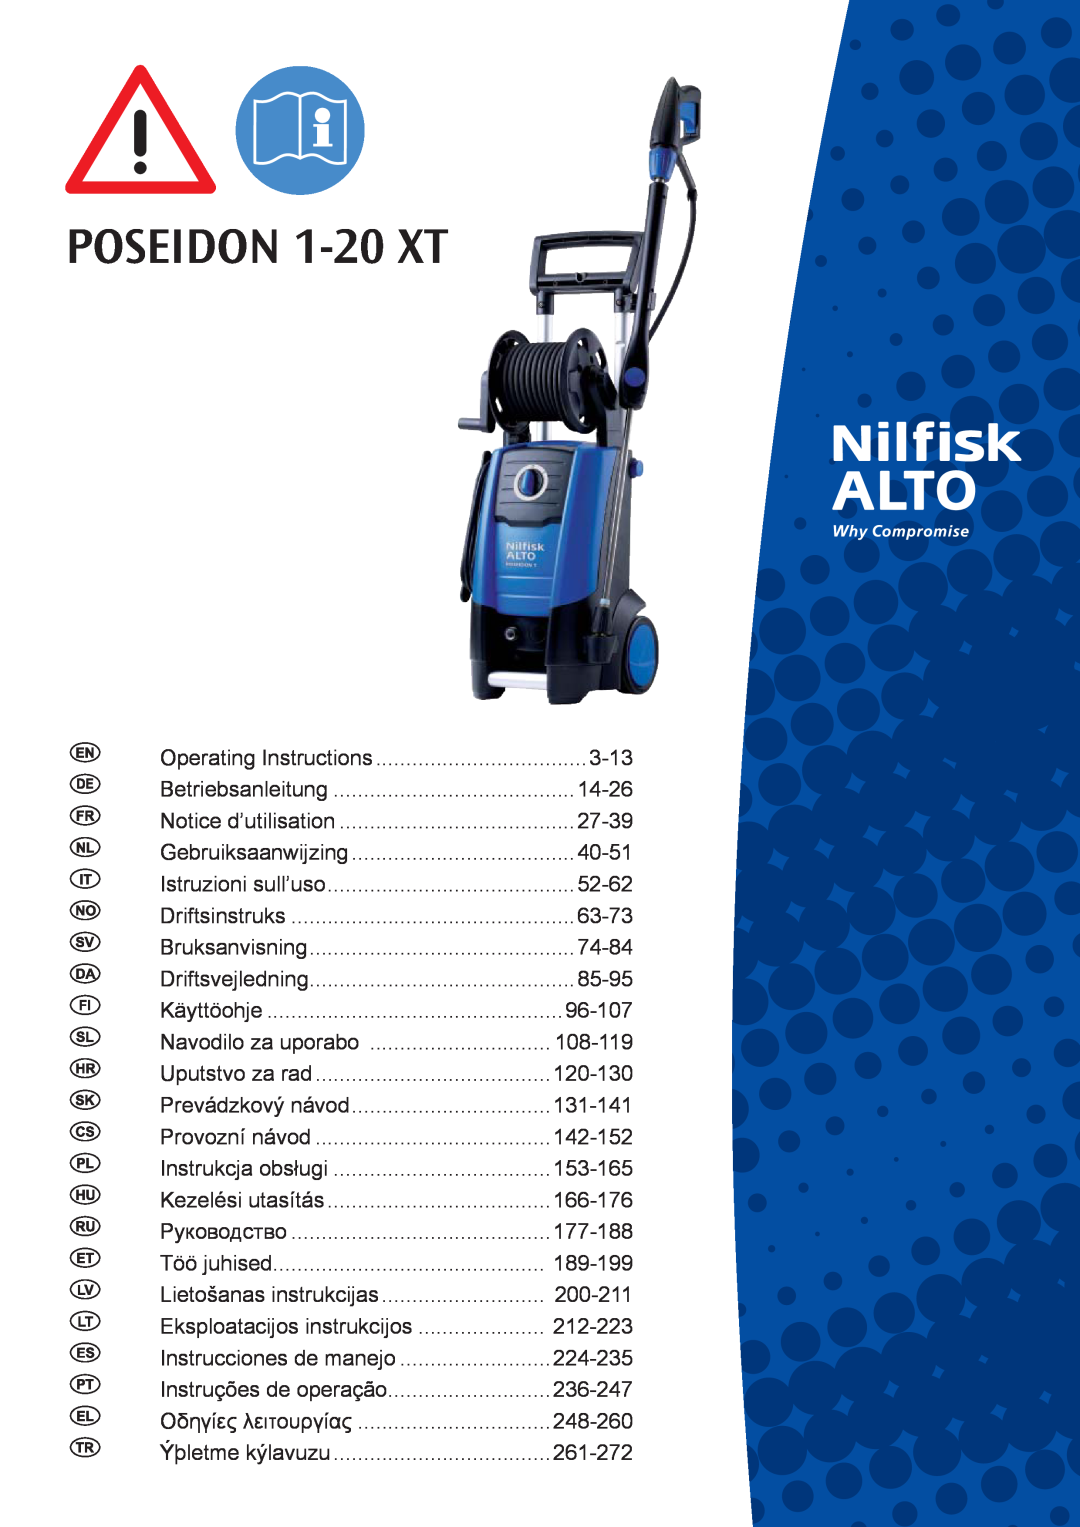 Nilfisk-ALTO manual POSEIDON 1-20 XT 